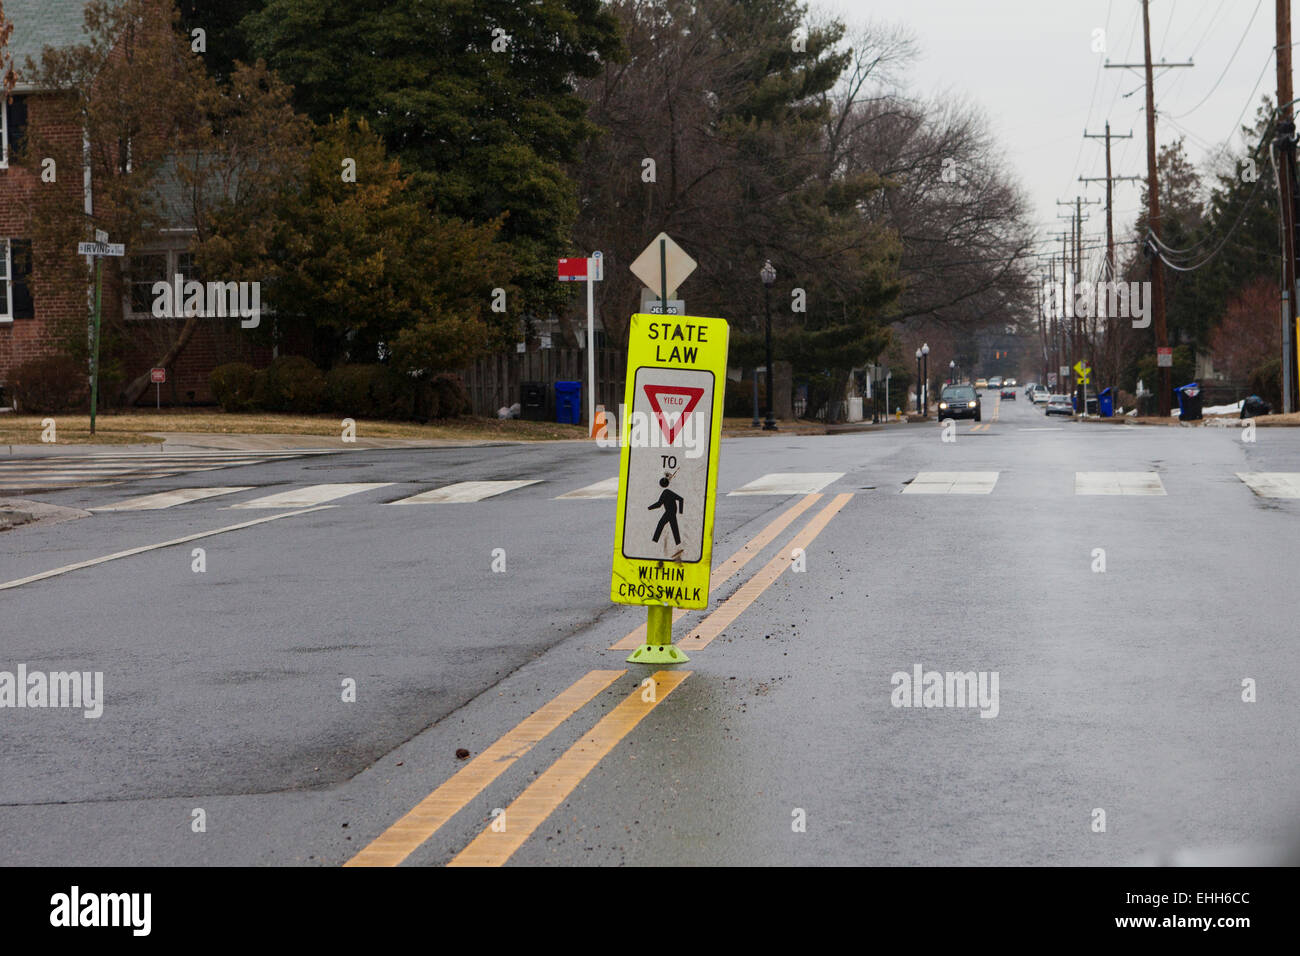 Pedestrian crosswalk yield sign - Virginia USA Stock Photo